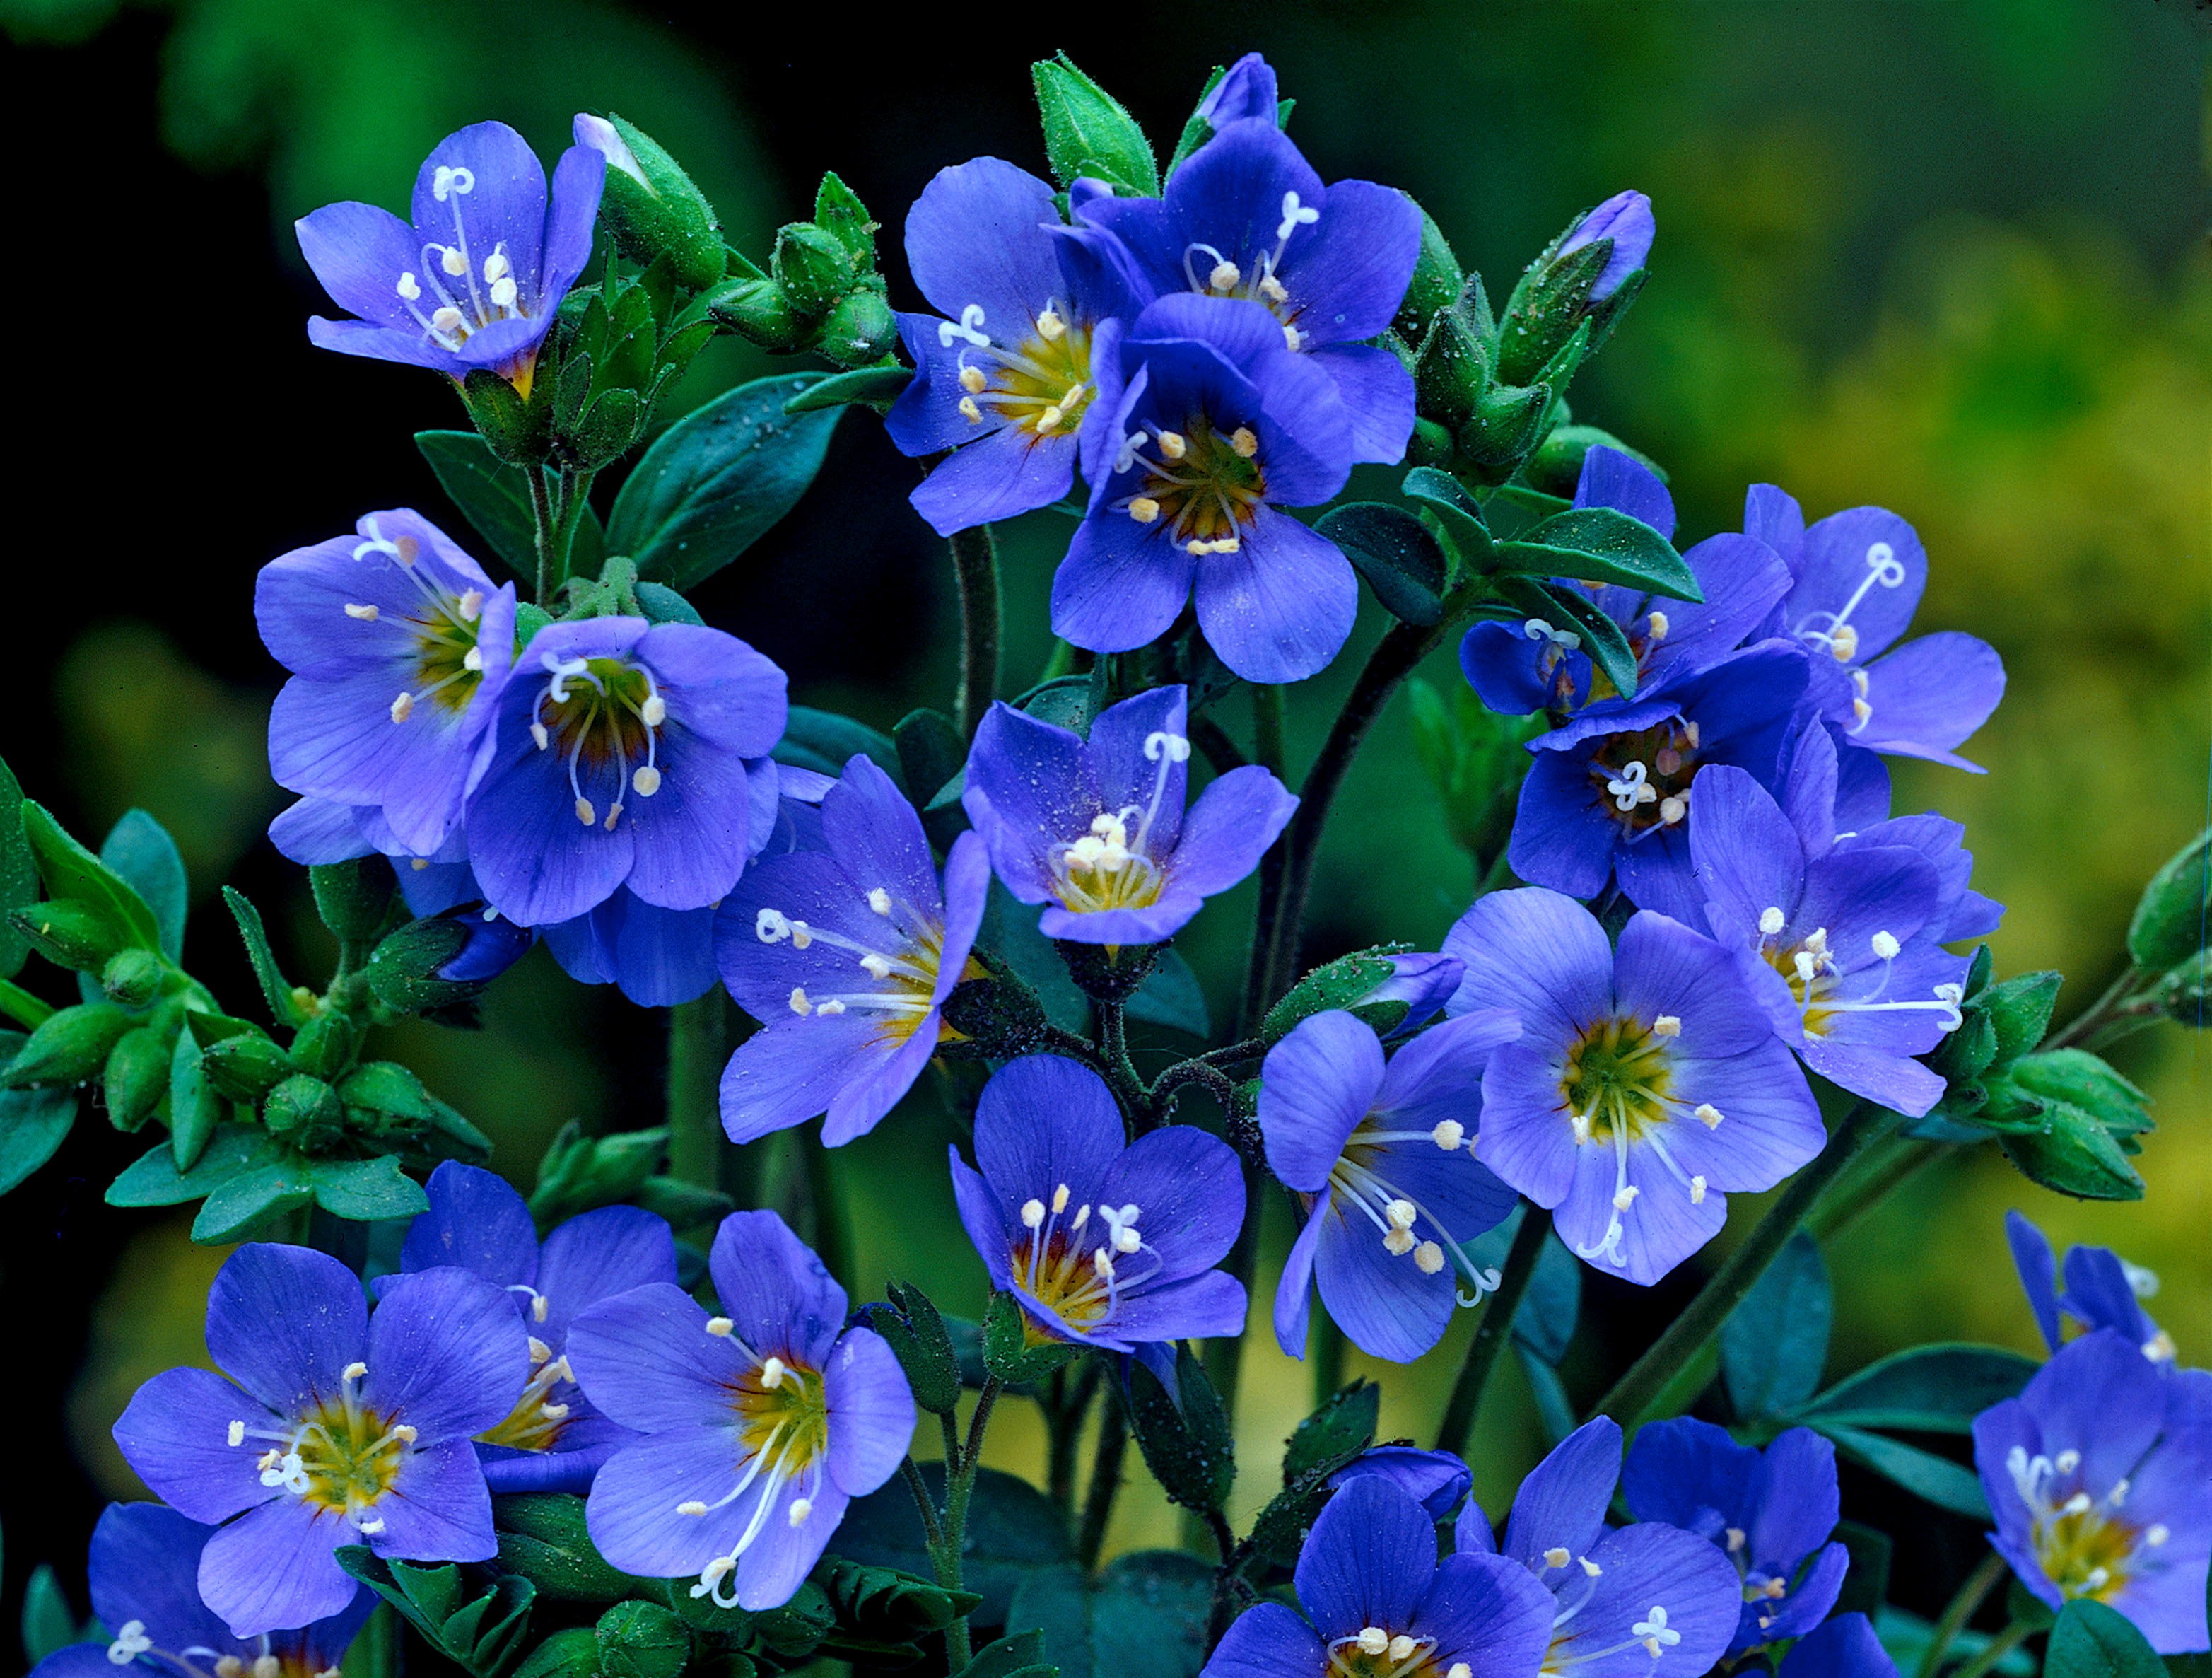 401677 descargar imagen tierra/naturaleza, nomeolvides, flor azul, flor, flores: fondos de pantalla y protectores de pantalla gratis